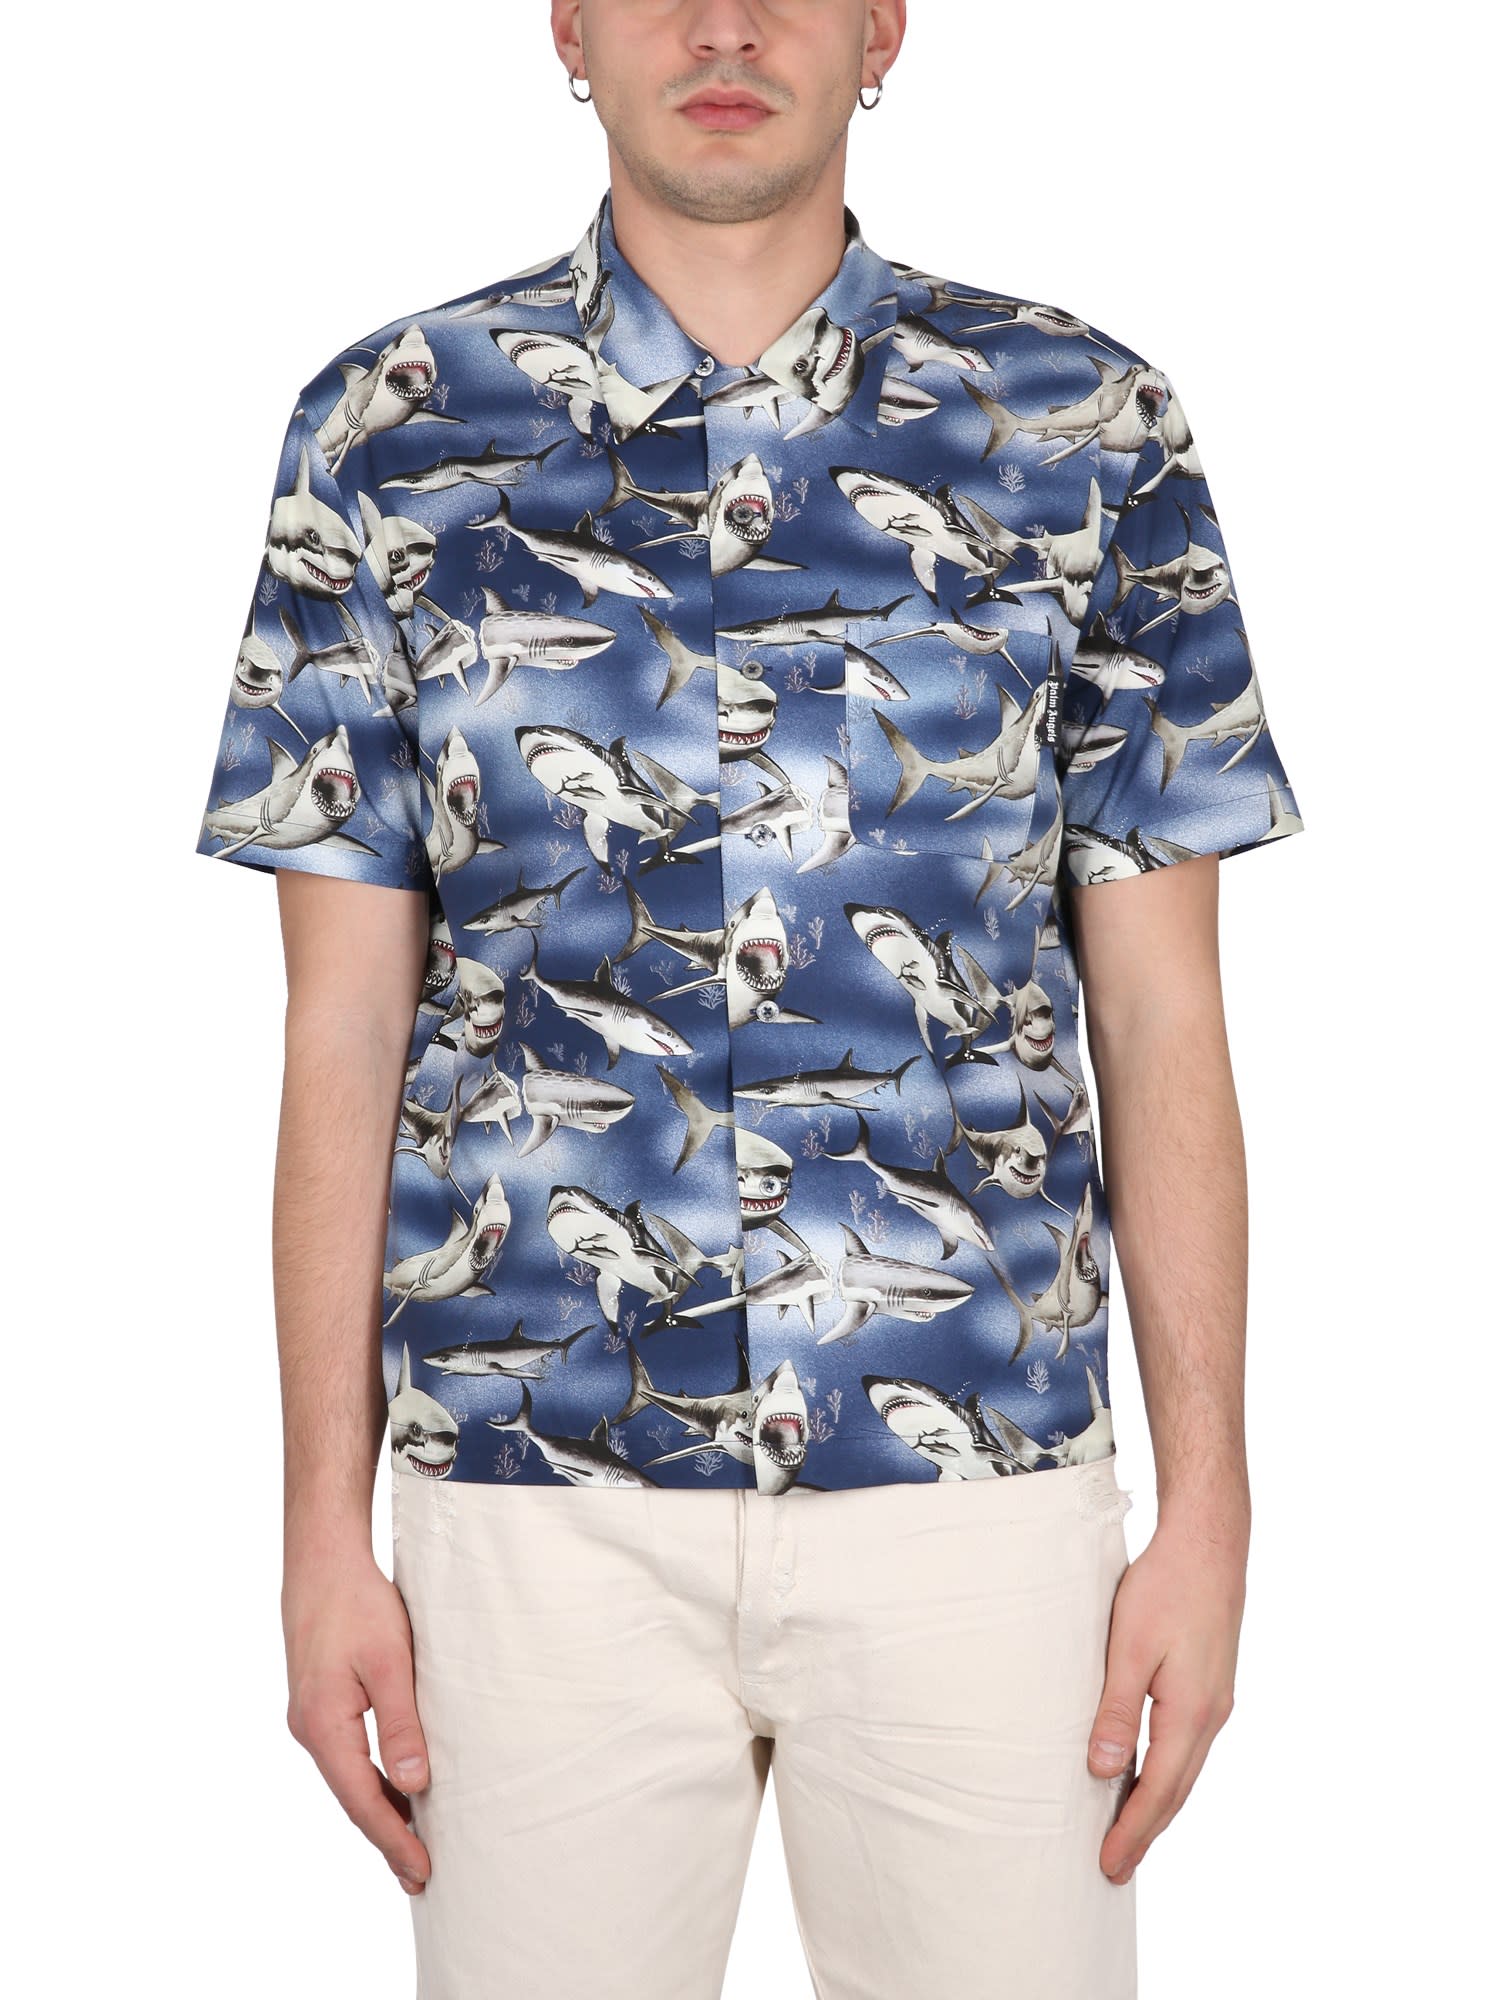 Palm Angels Sharks Bowling Shirt